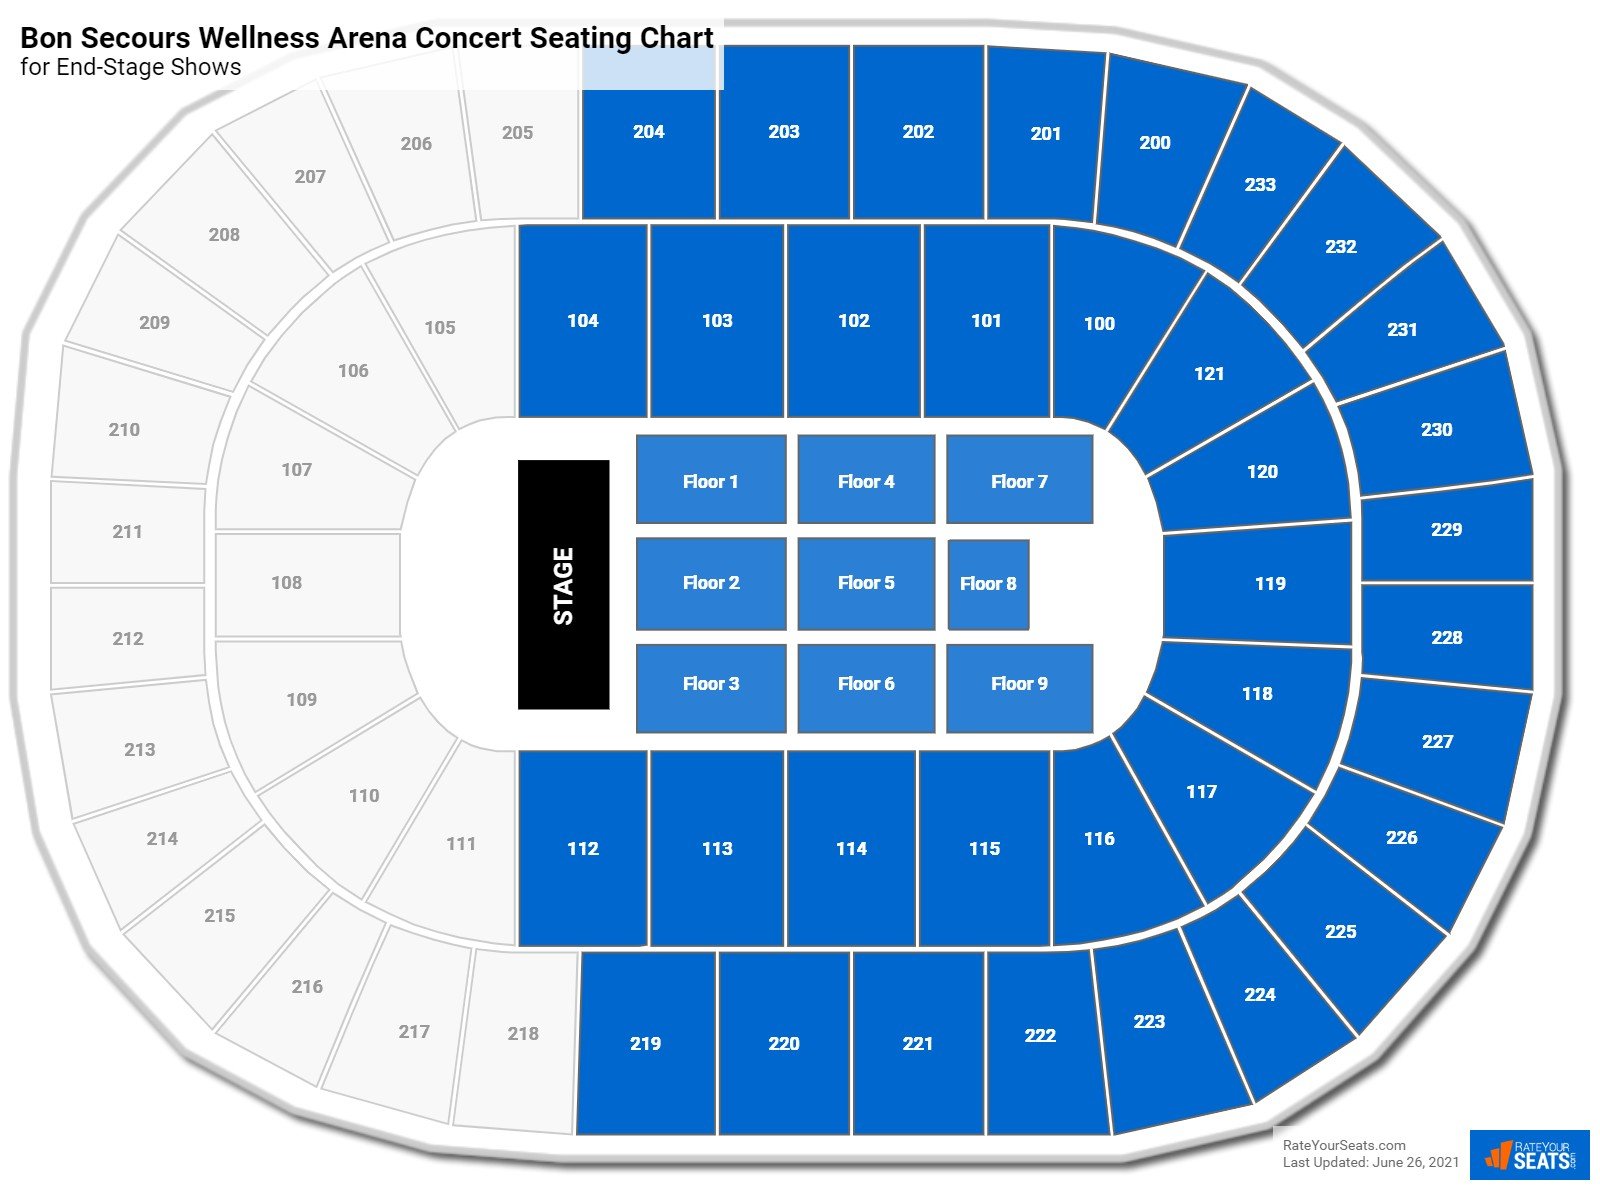 Bon Secours Wellness Arena Concert Seating Chart